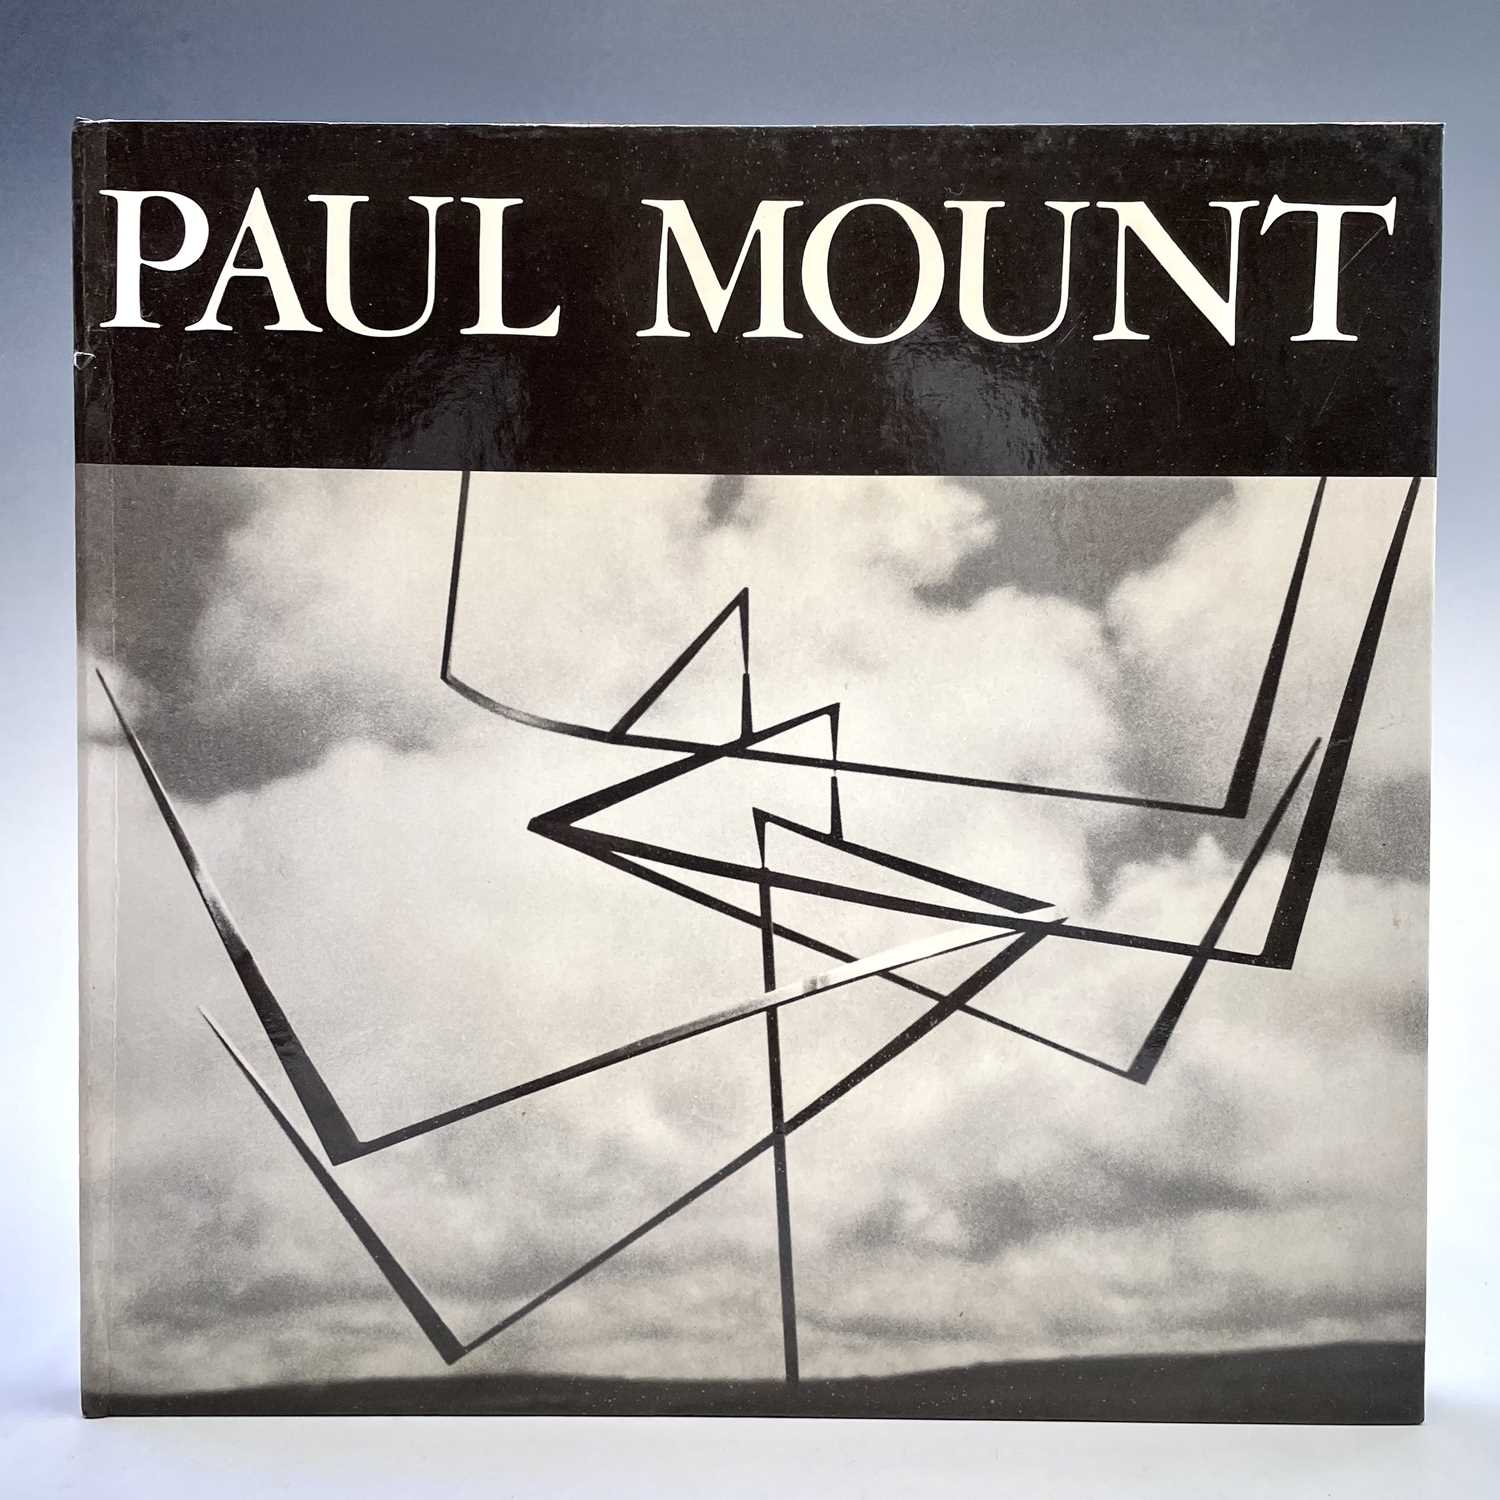 Paul MOUNT. 'Sculpture a retrospective selection. Nancherrow studio, 1981. Signed by the artist